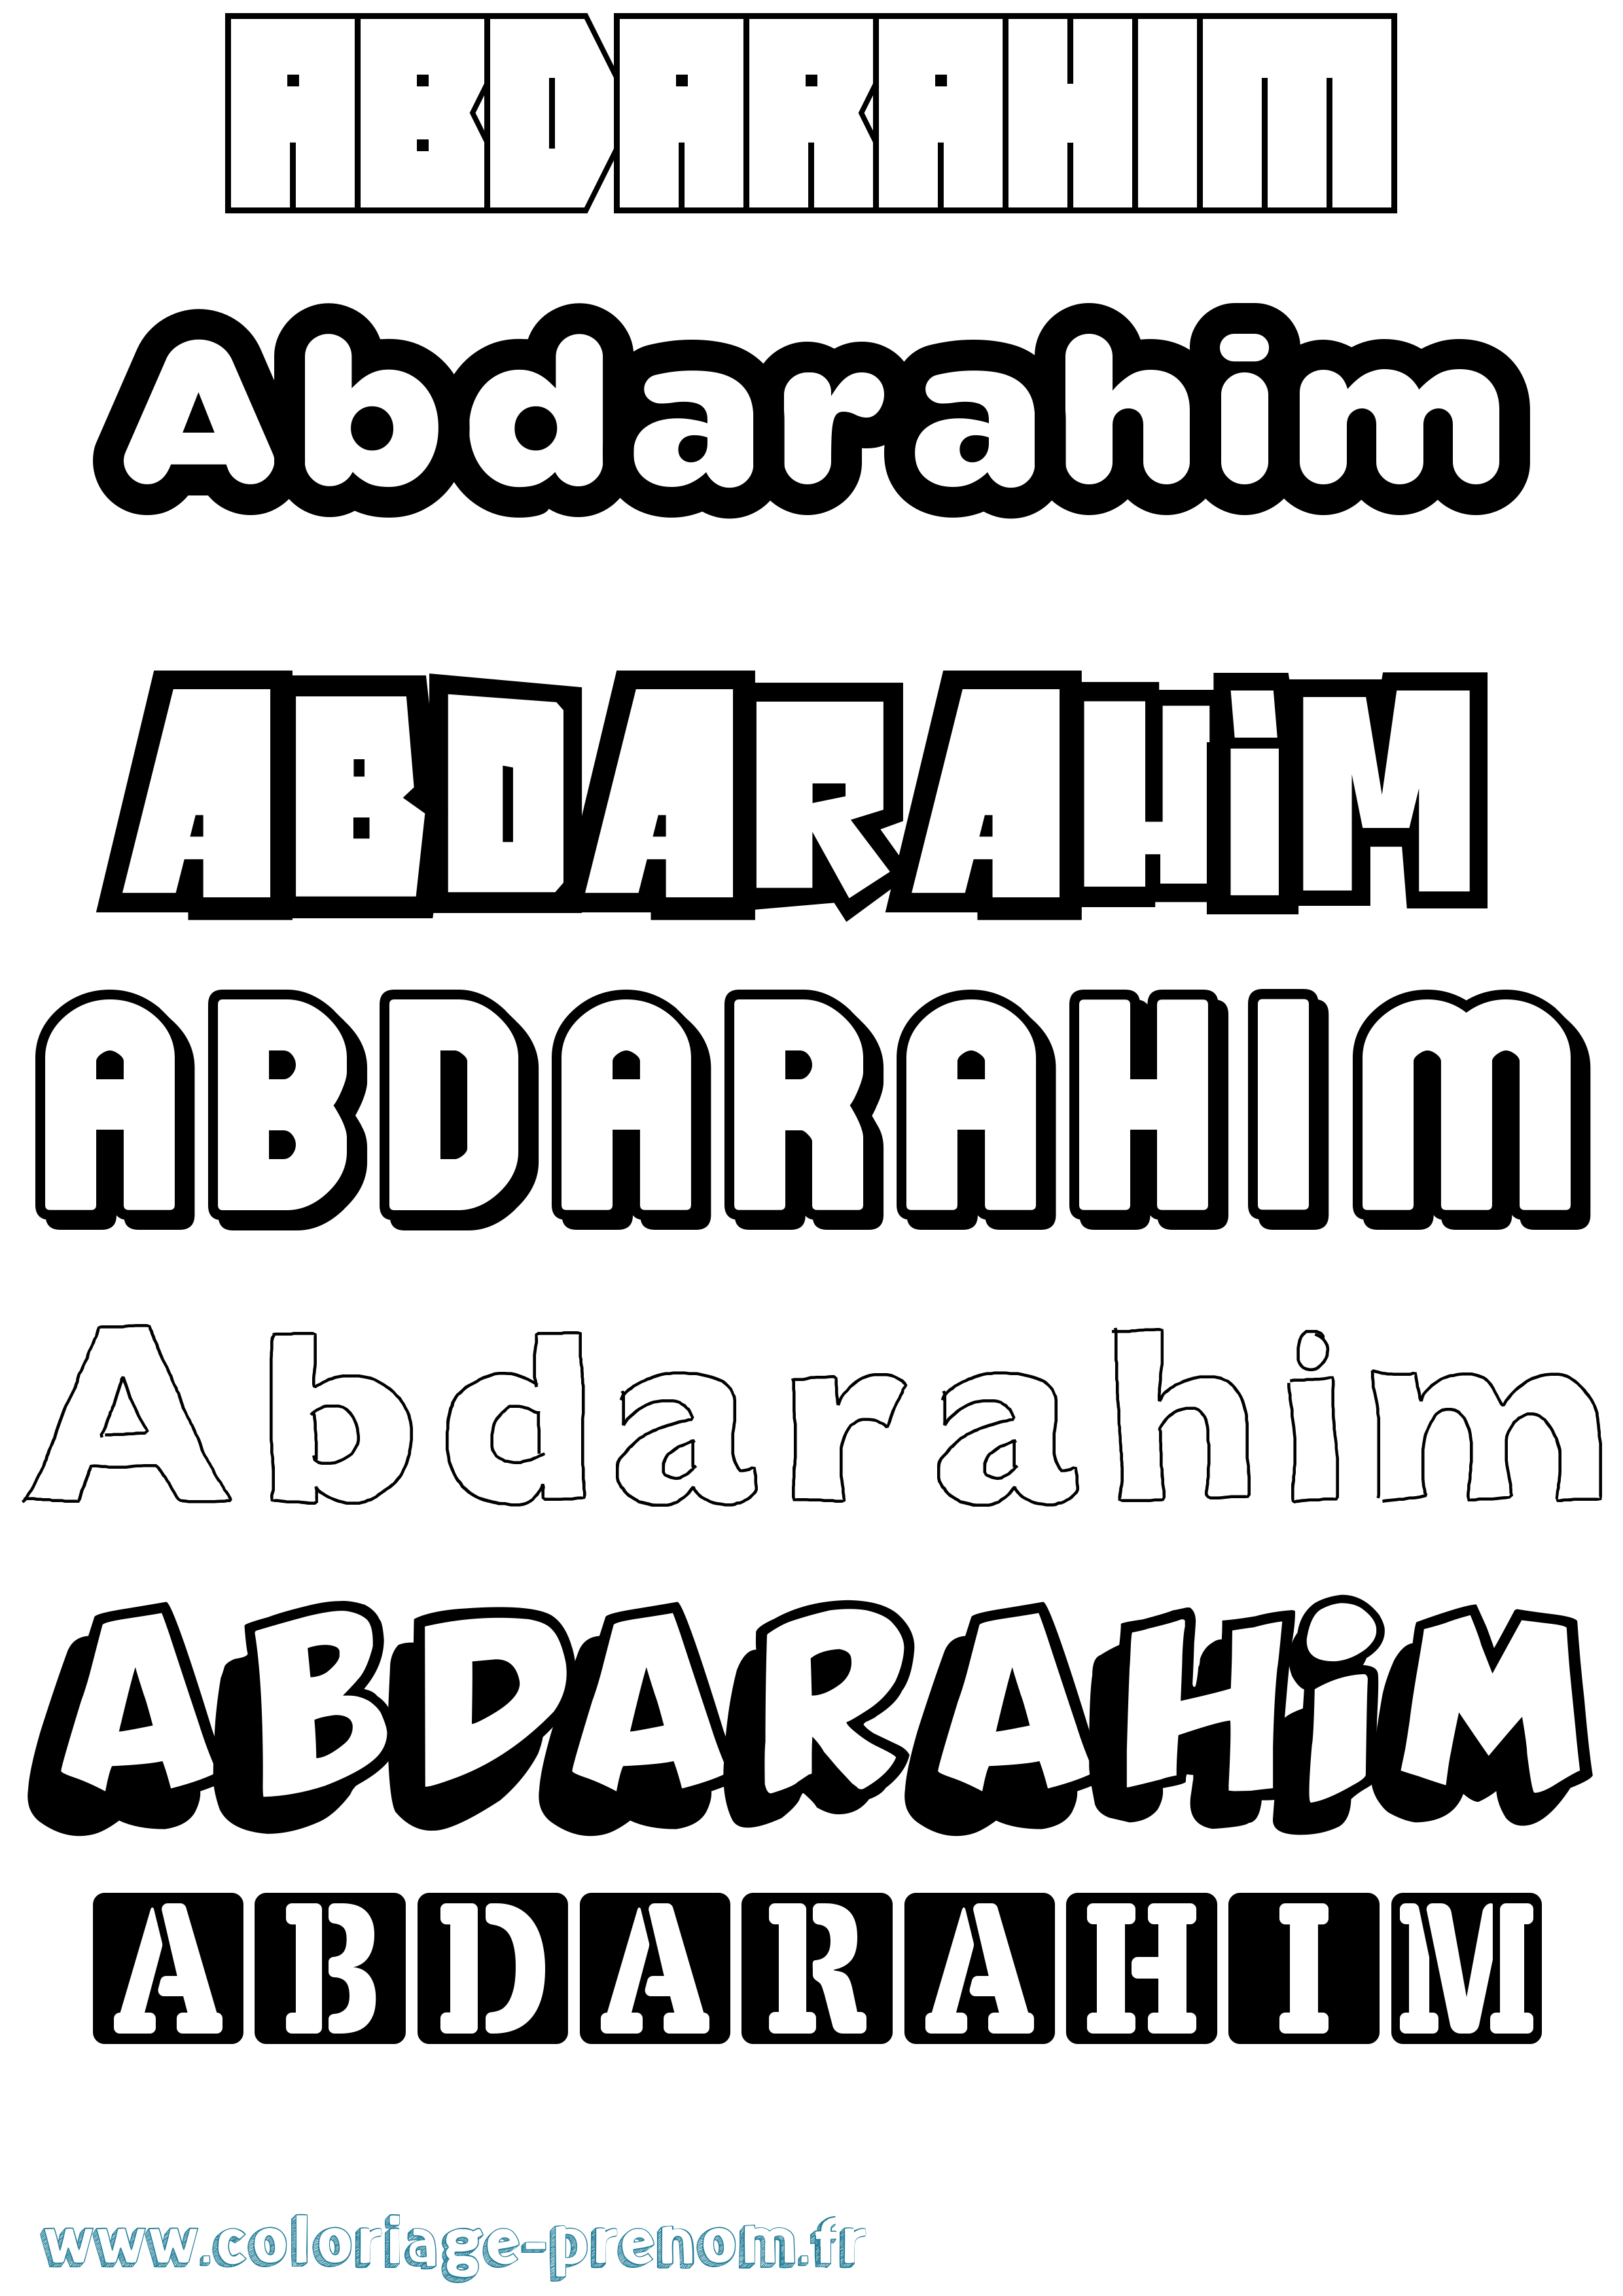 Coloriage prénom Abdarahim Simple